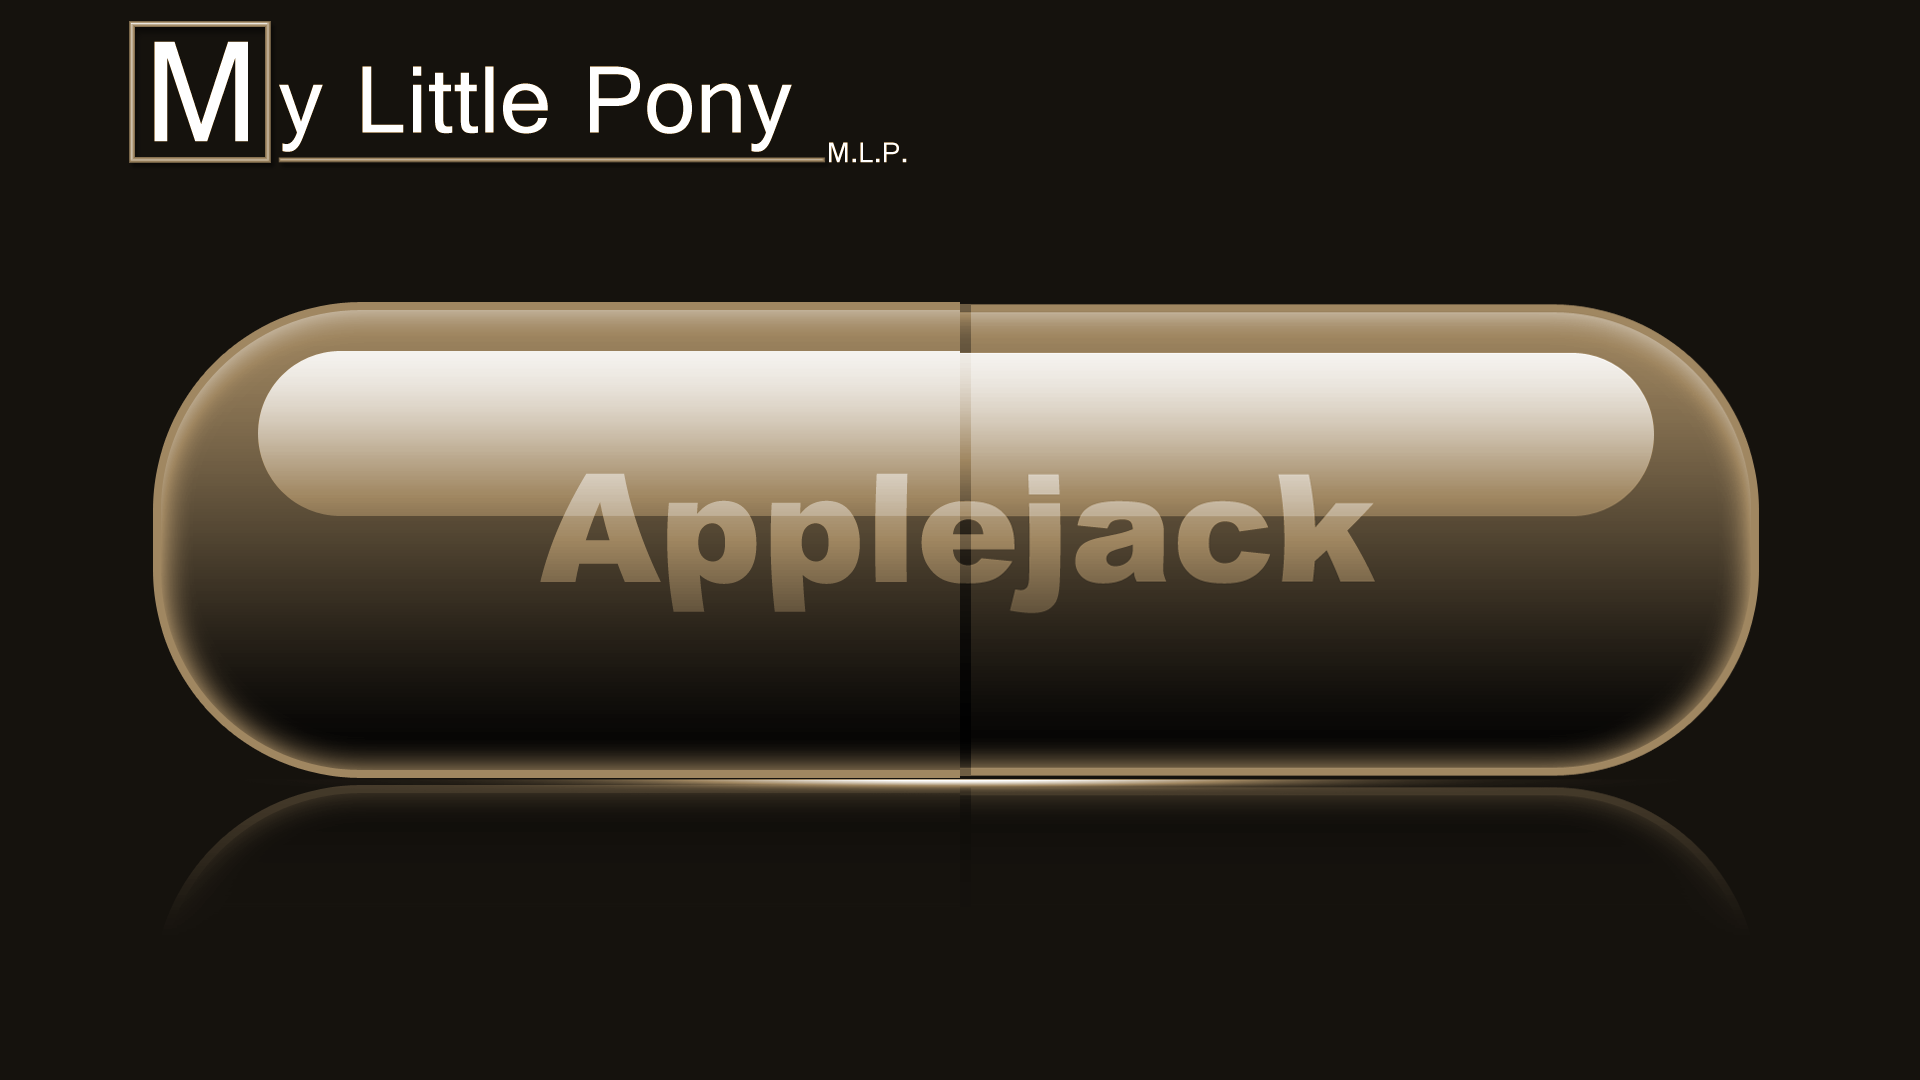 Pill - AppleJack by pims1978